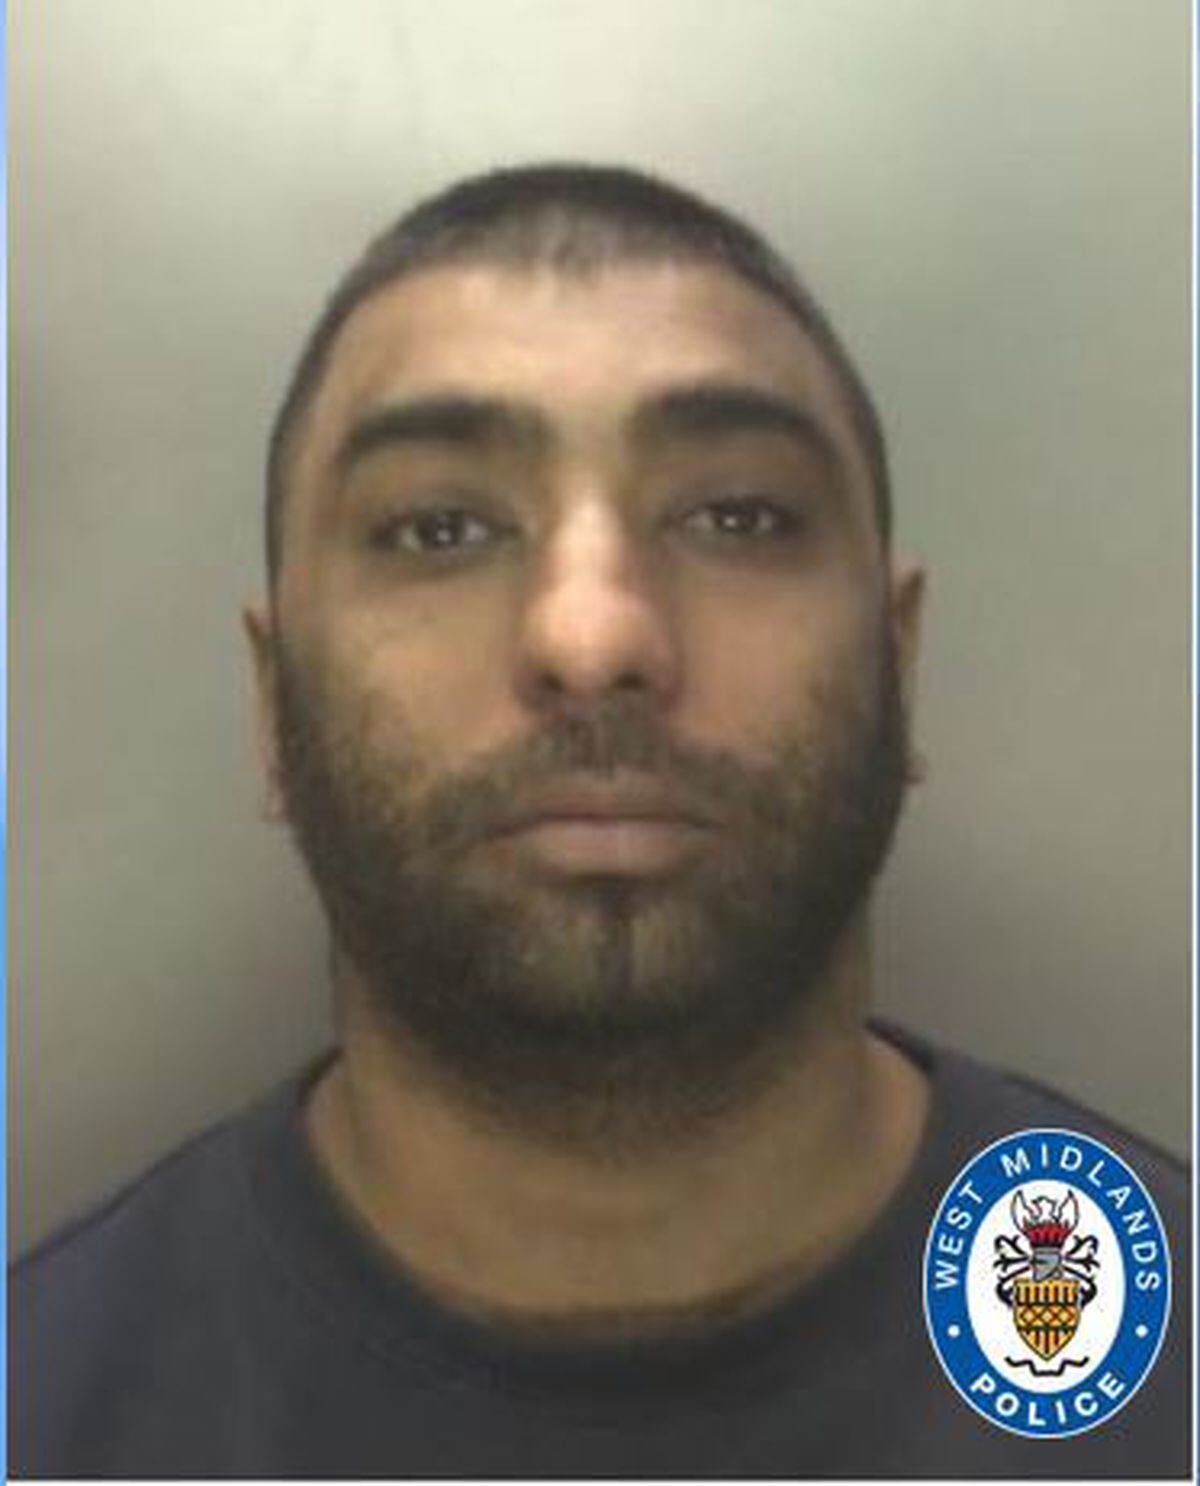 Gurdev Singh was a member of a crack cocaine drugs gang. Picture: West Midlands Police